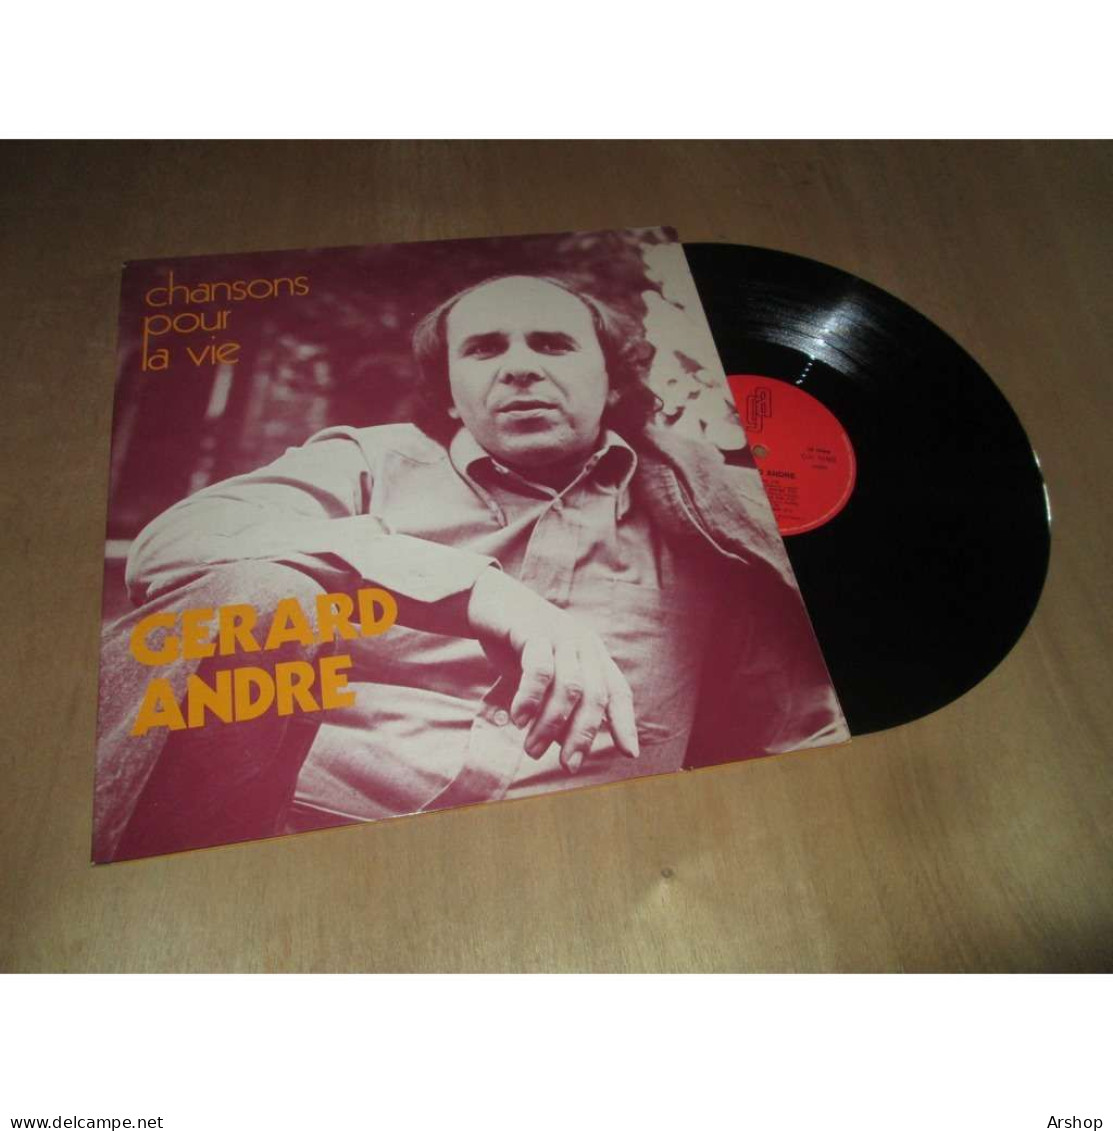 GERARD ANDRE Chansons Pour La Vie CHANSON FOLK POESIE - GA Productions Lp 1977 - Other - French Music